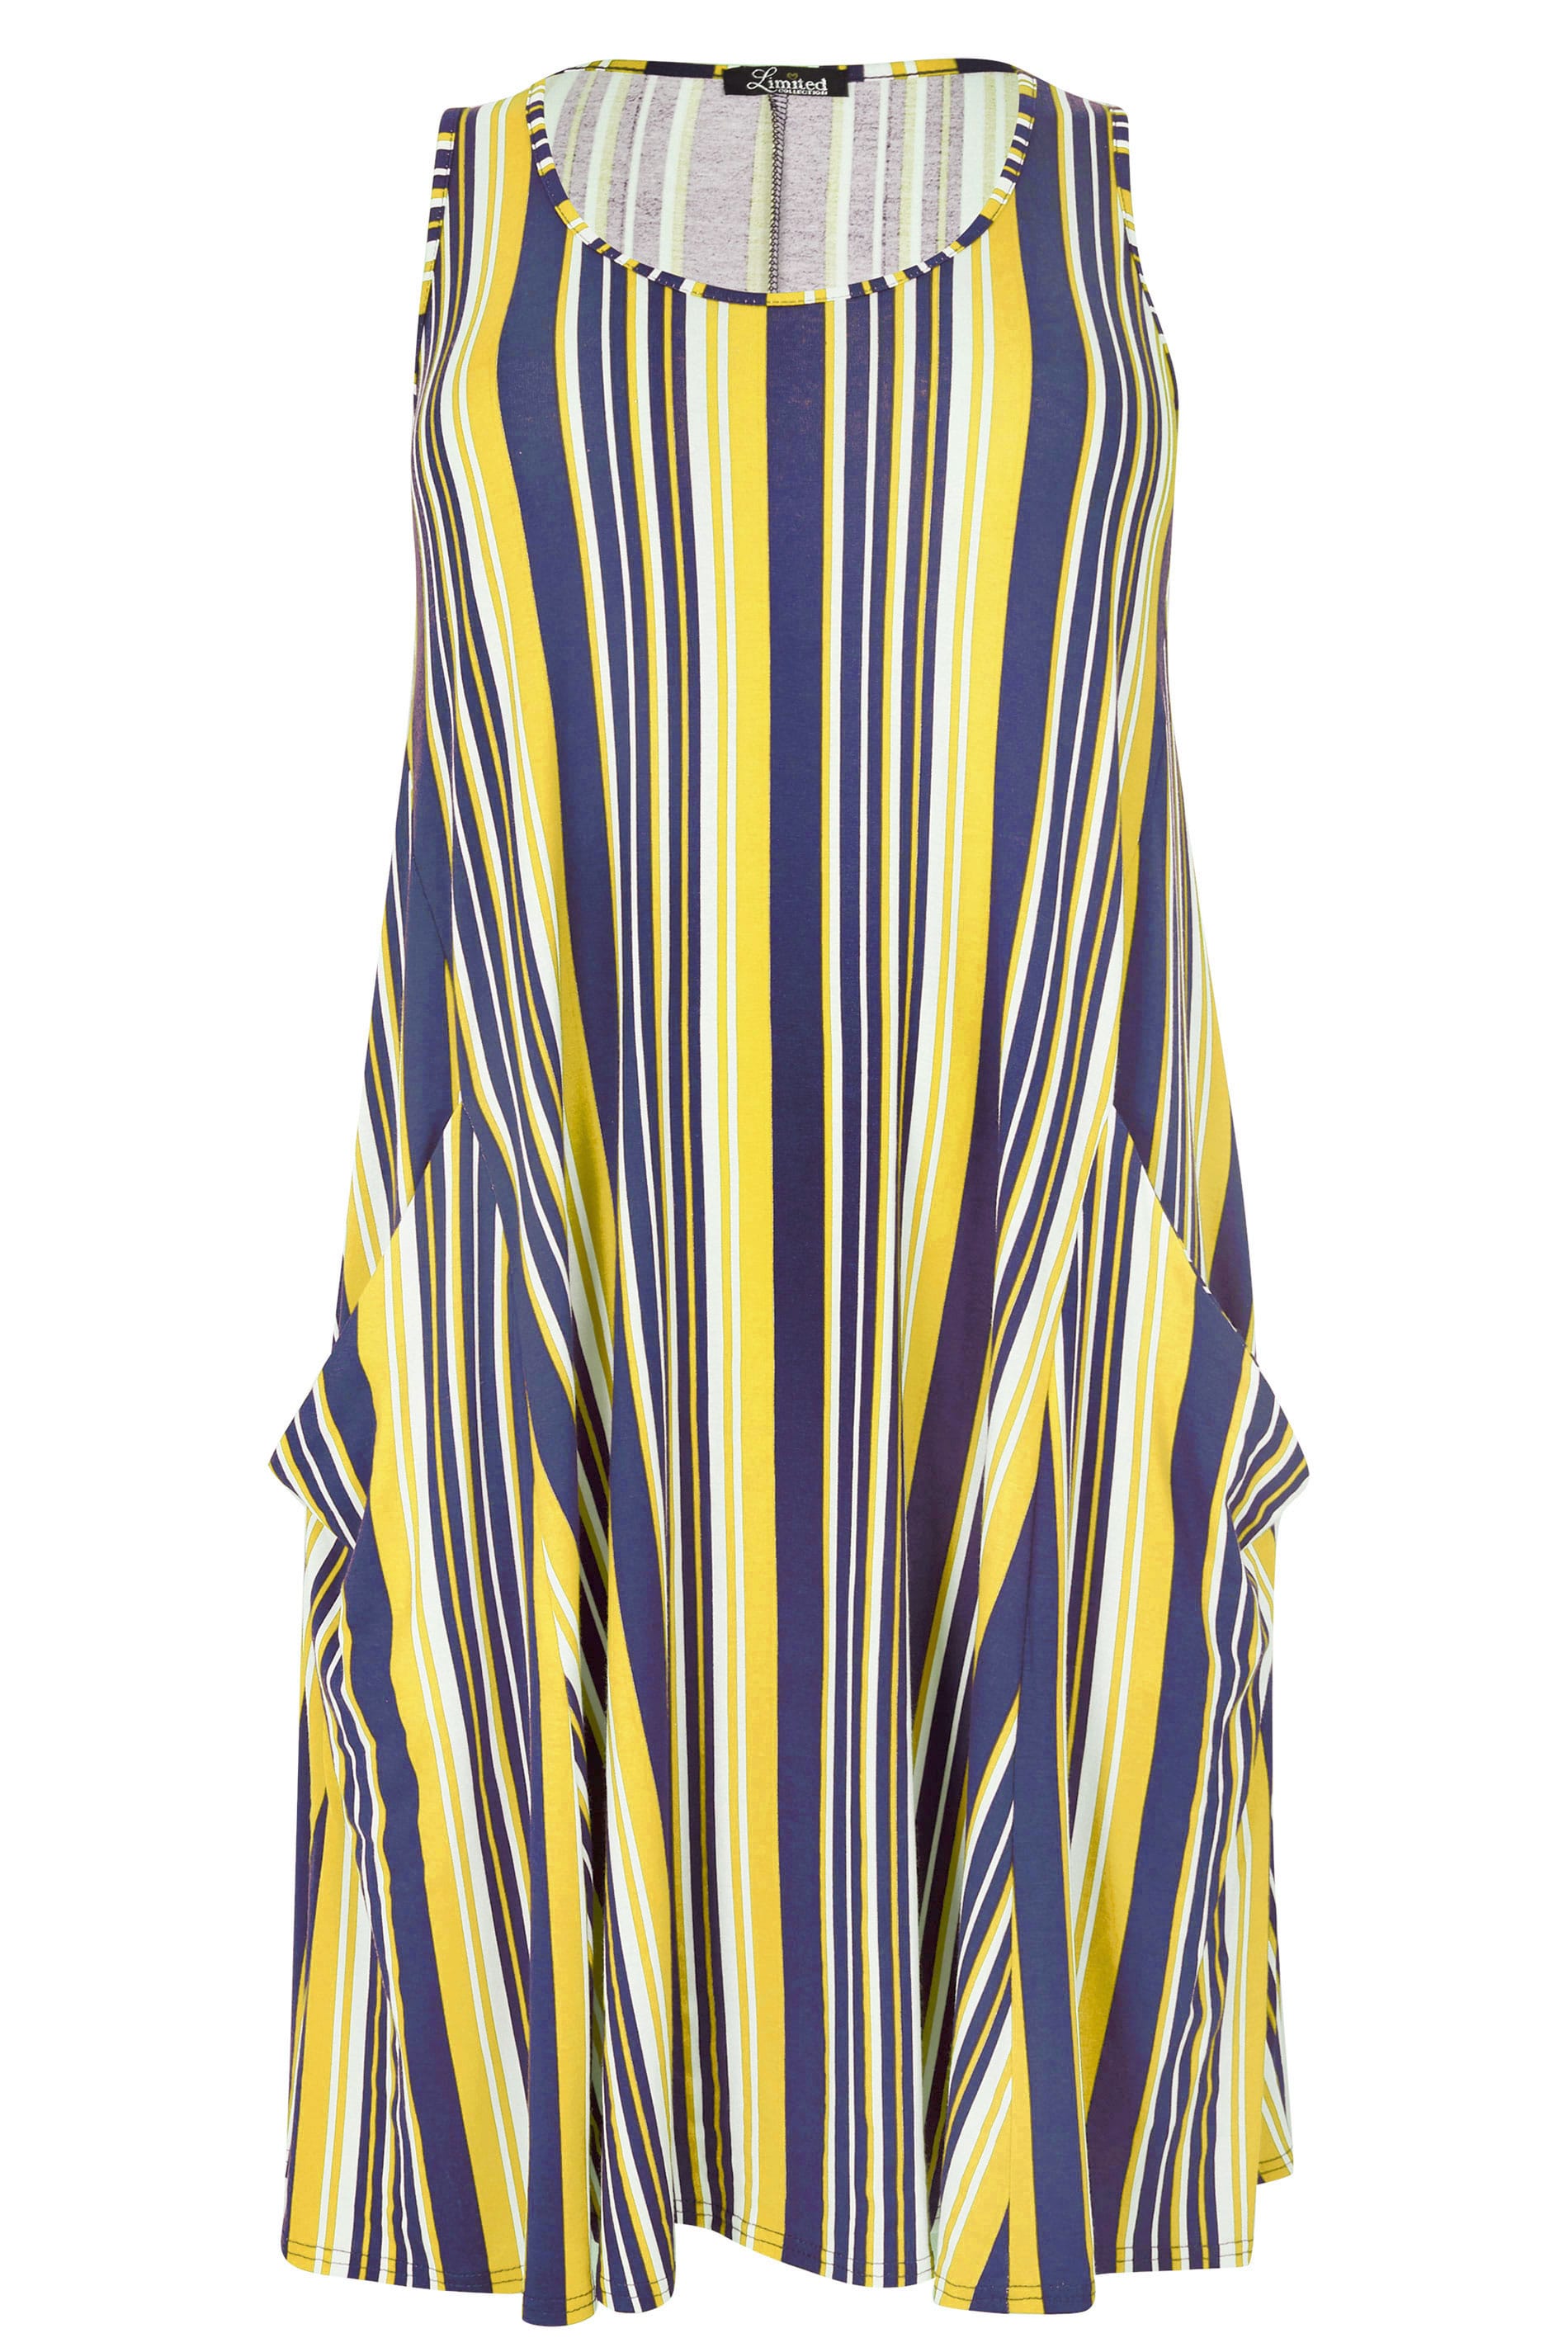 Navy & Yellow Striped Drape Pocket Dress | Plus size 16 to 32 | Yours ...